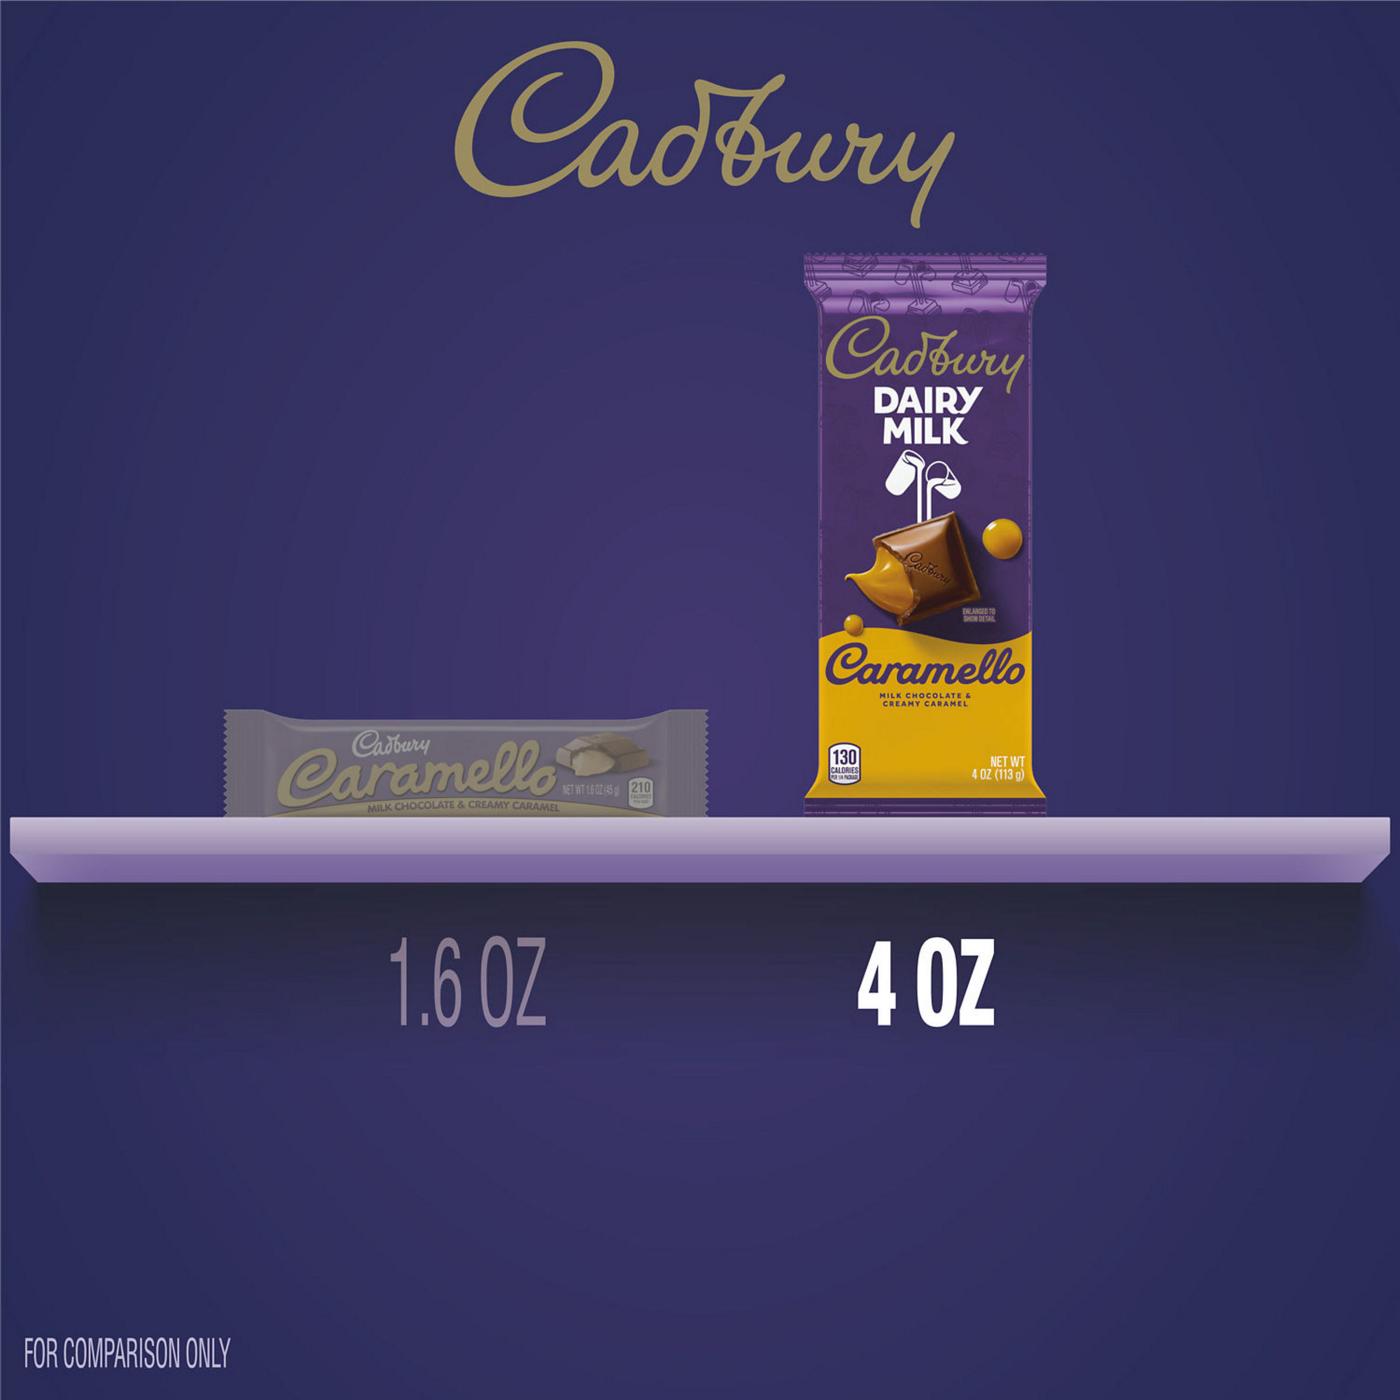 Cadbury Dairy Milk Caramello Chocolate Candy Bar; image 7 of 7